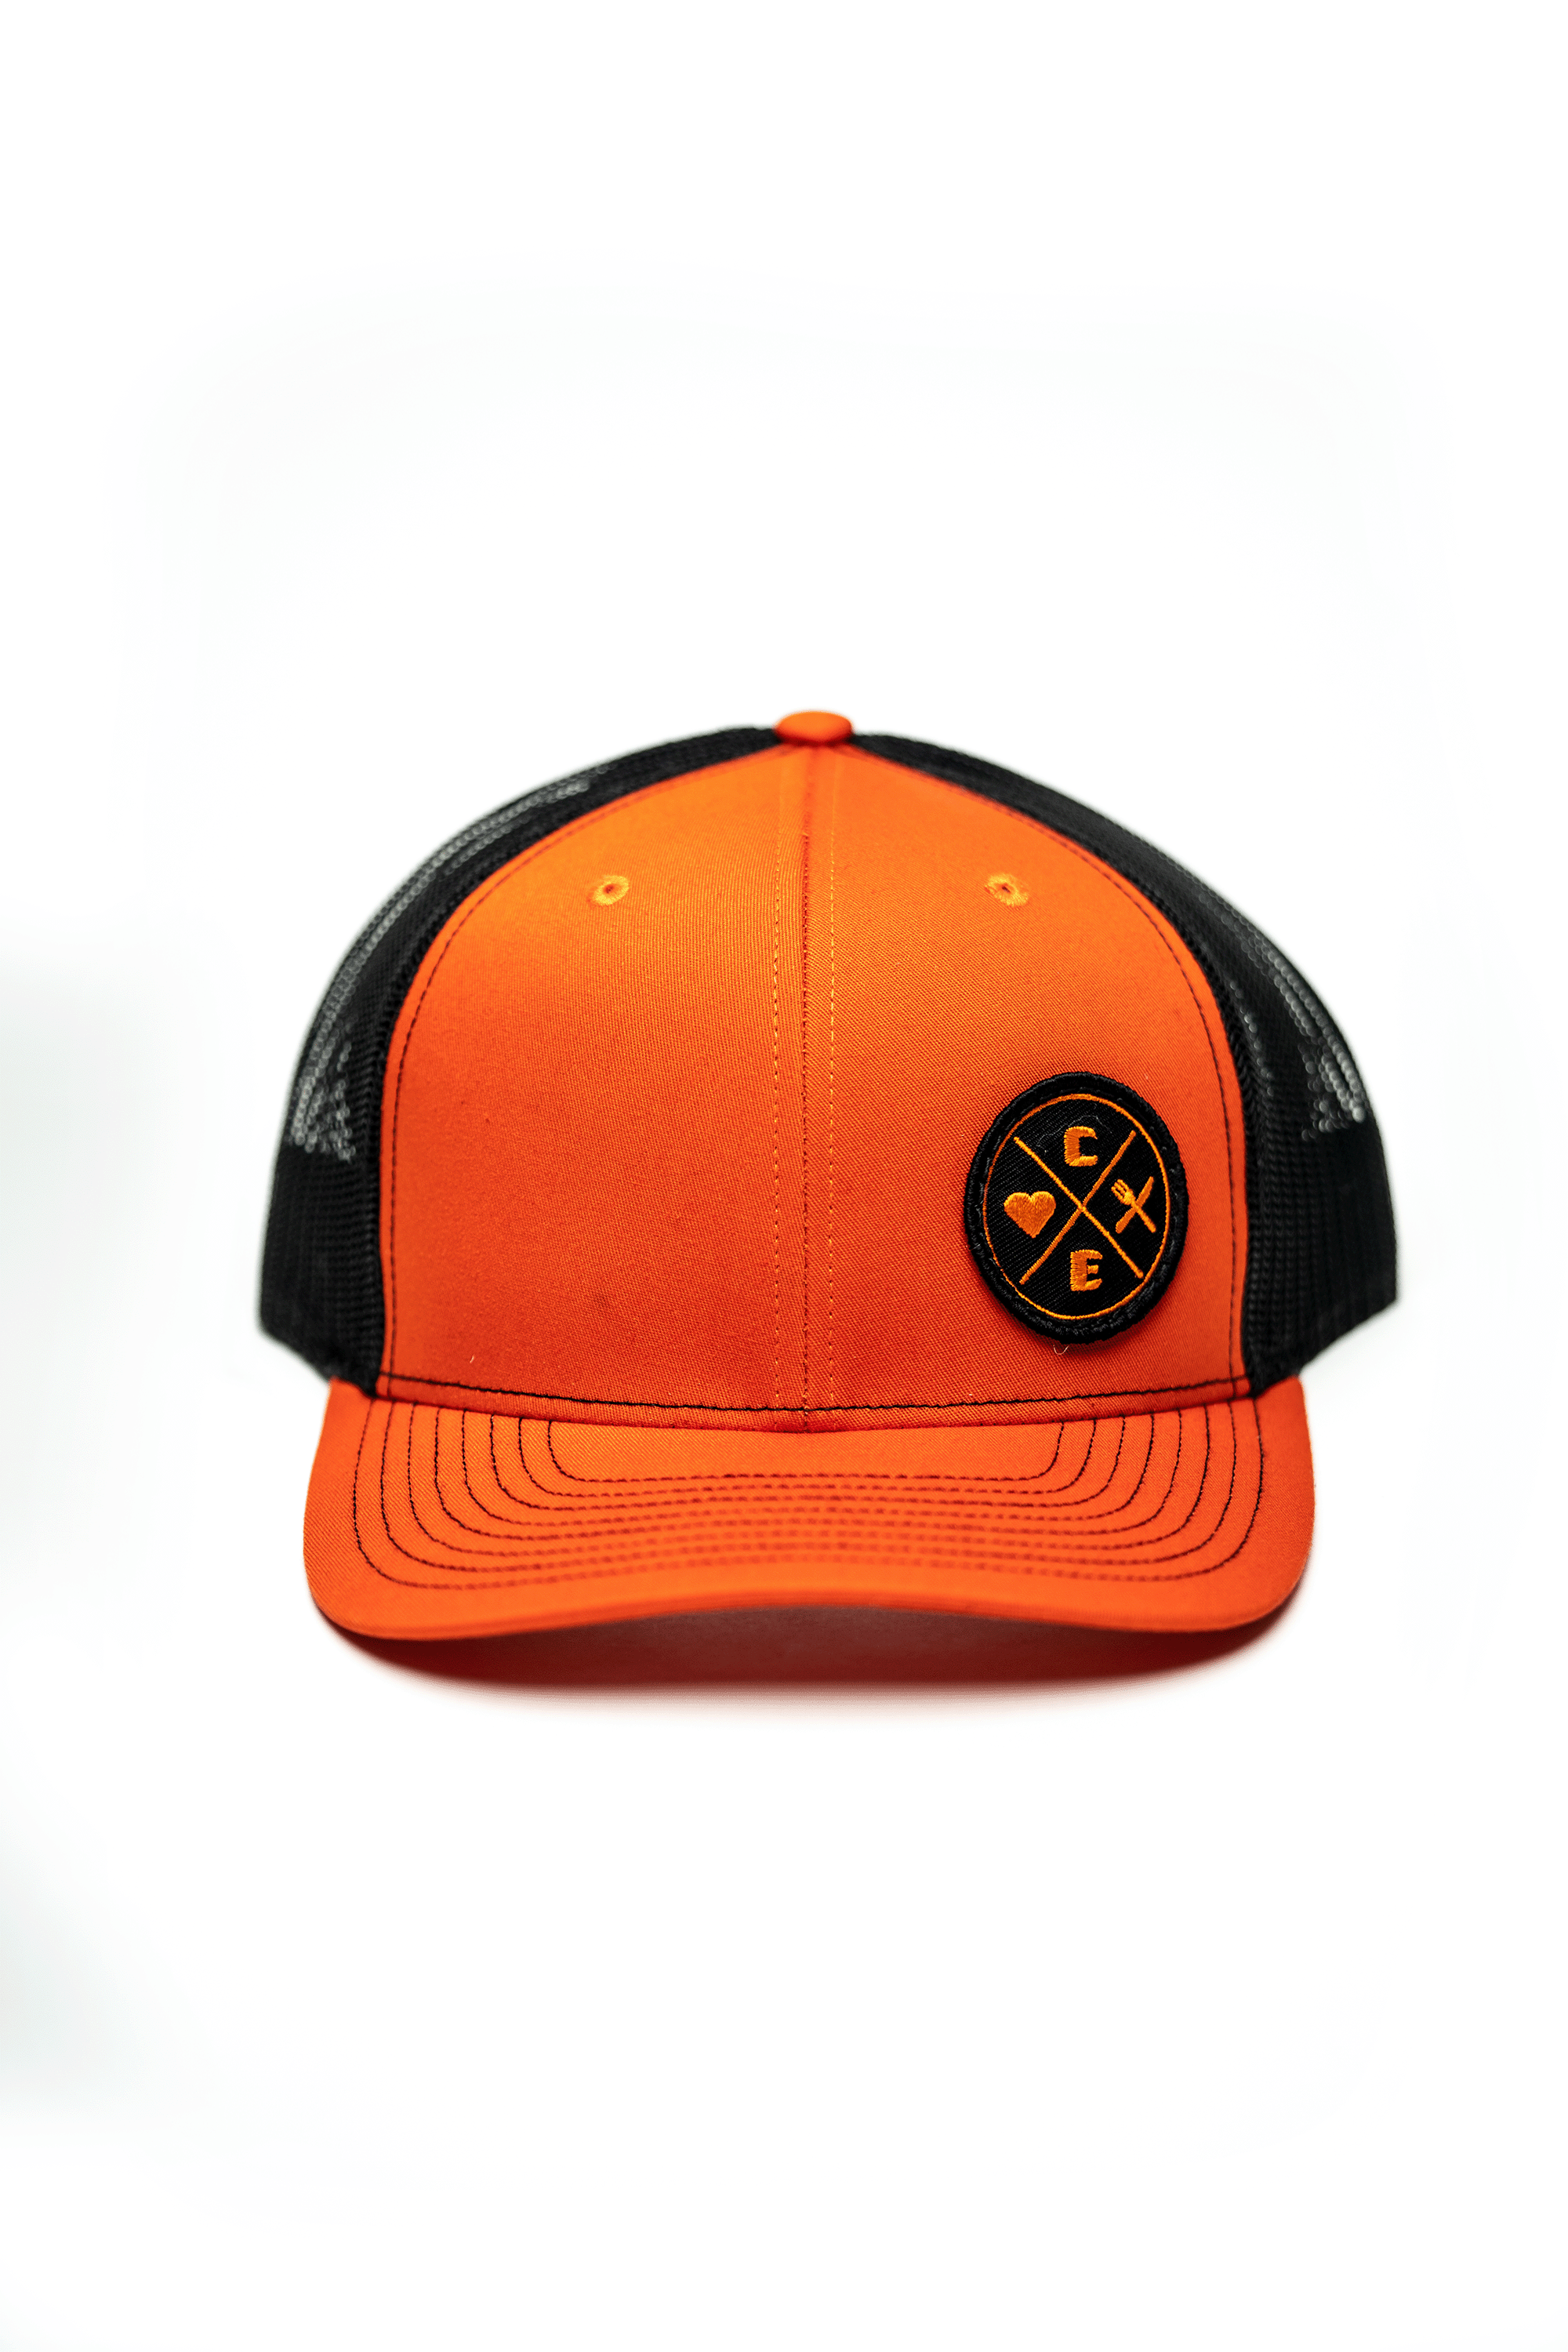 Circle – Clean Eatz Patch Logo Merch CE Side Hat